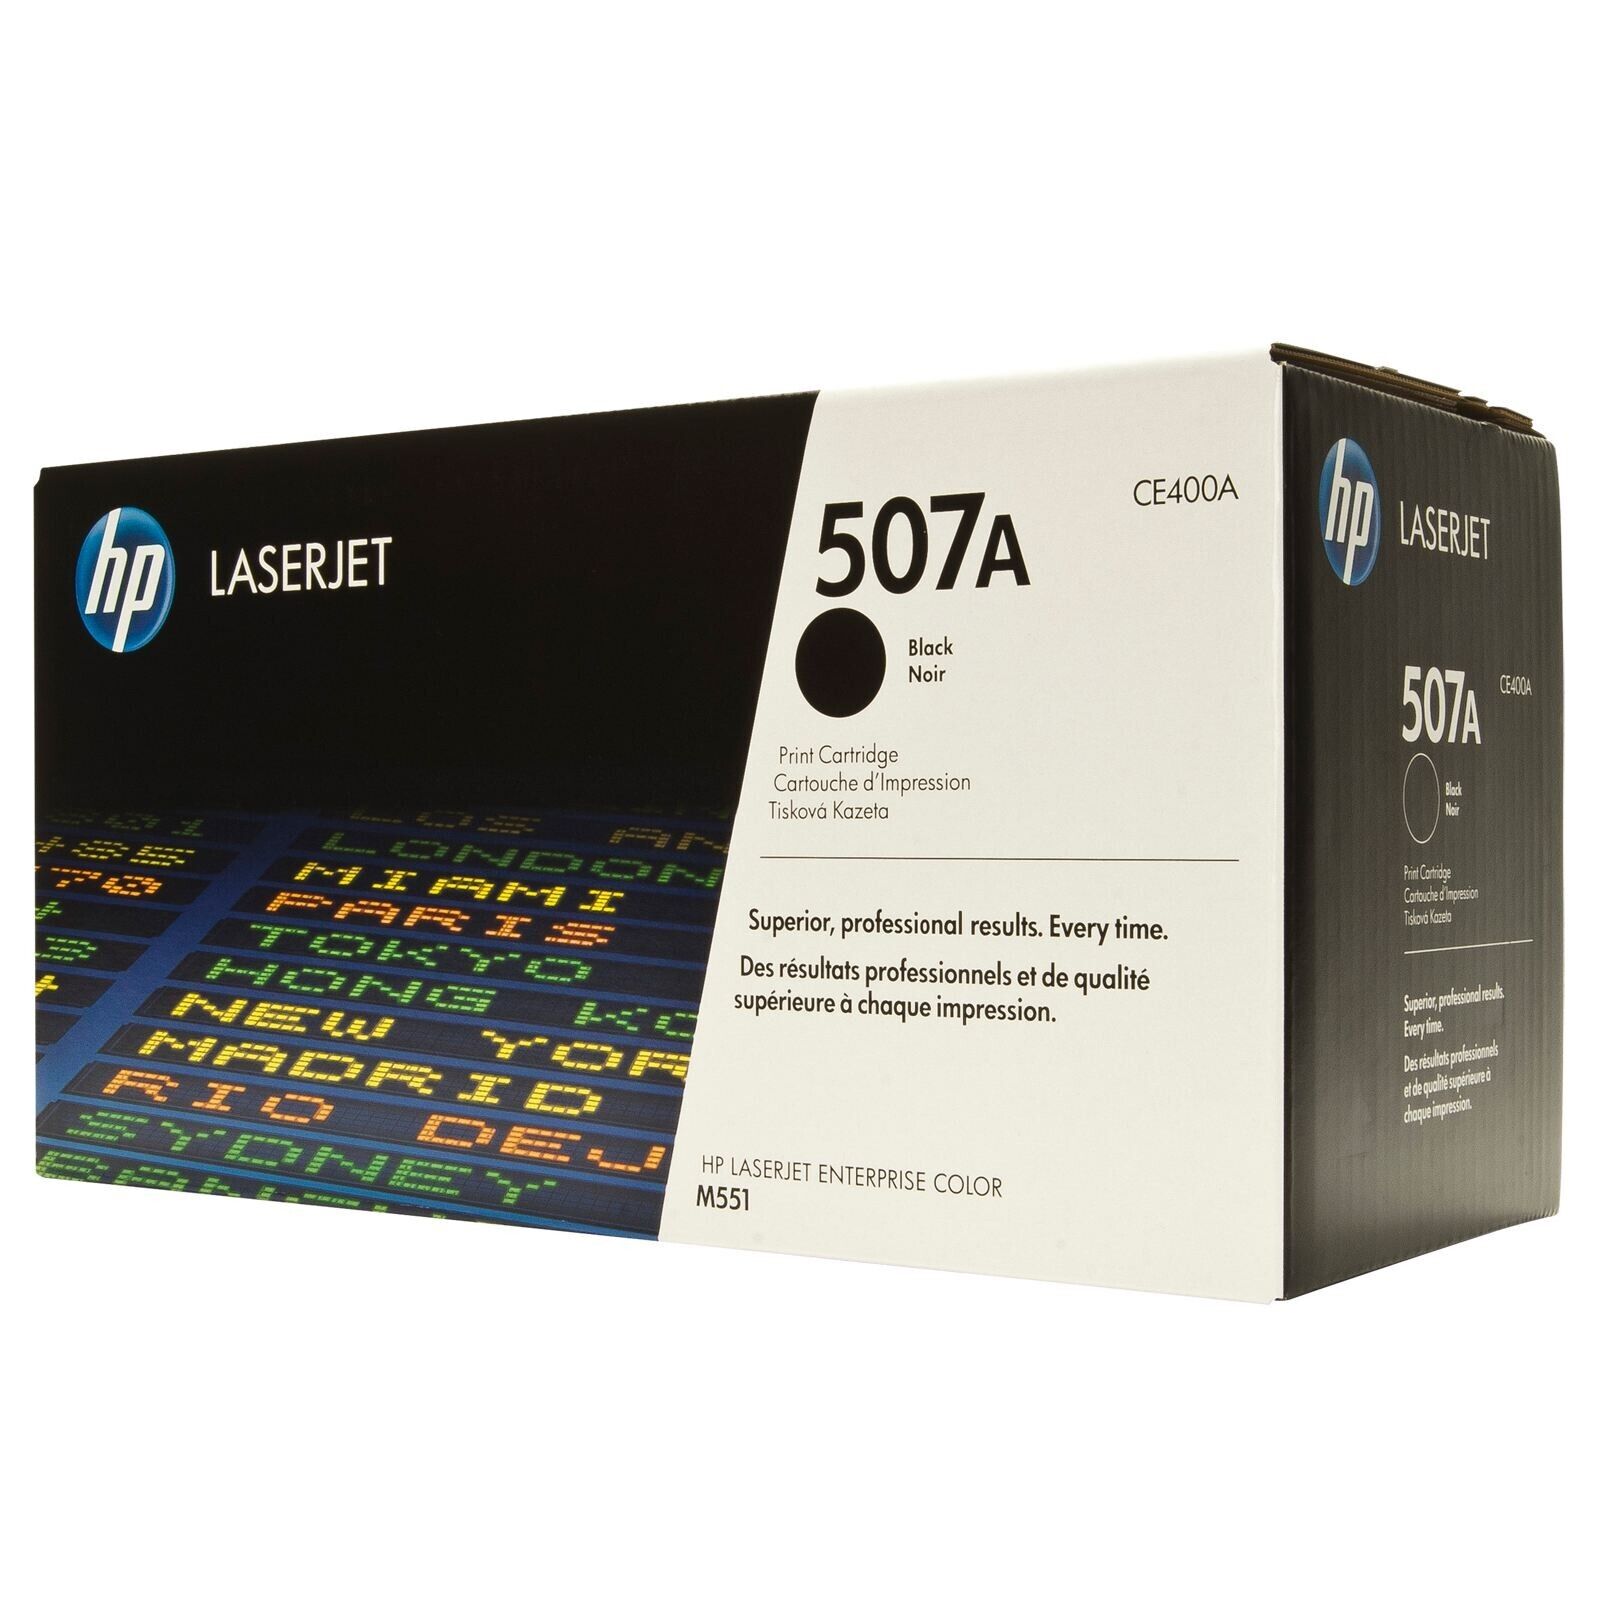 Genuine HP 507A Black Toner Cartridges Black Box CE400A OPEN BOX SEALED BAG